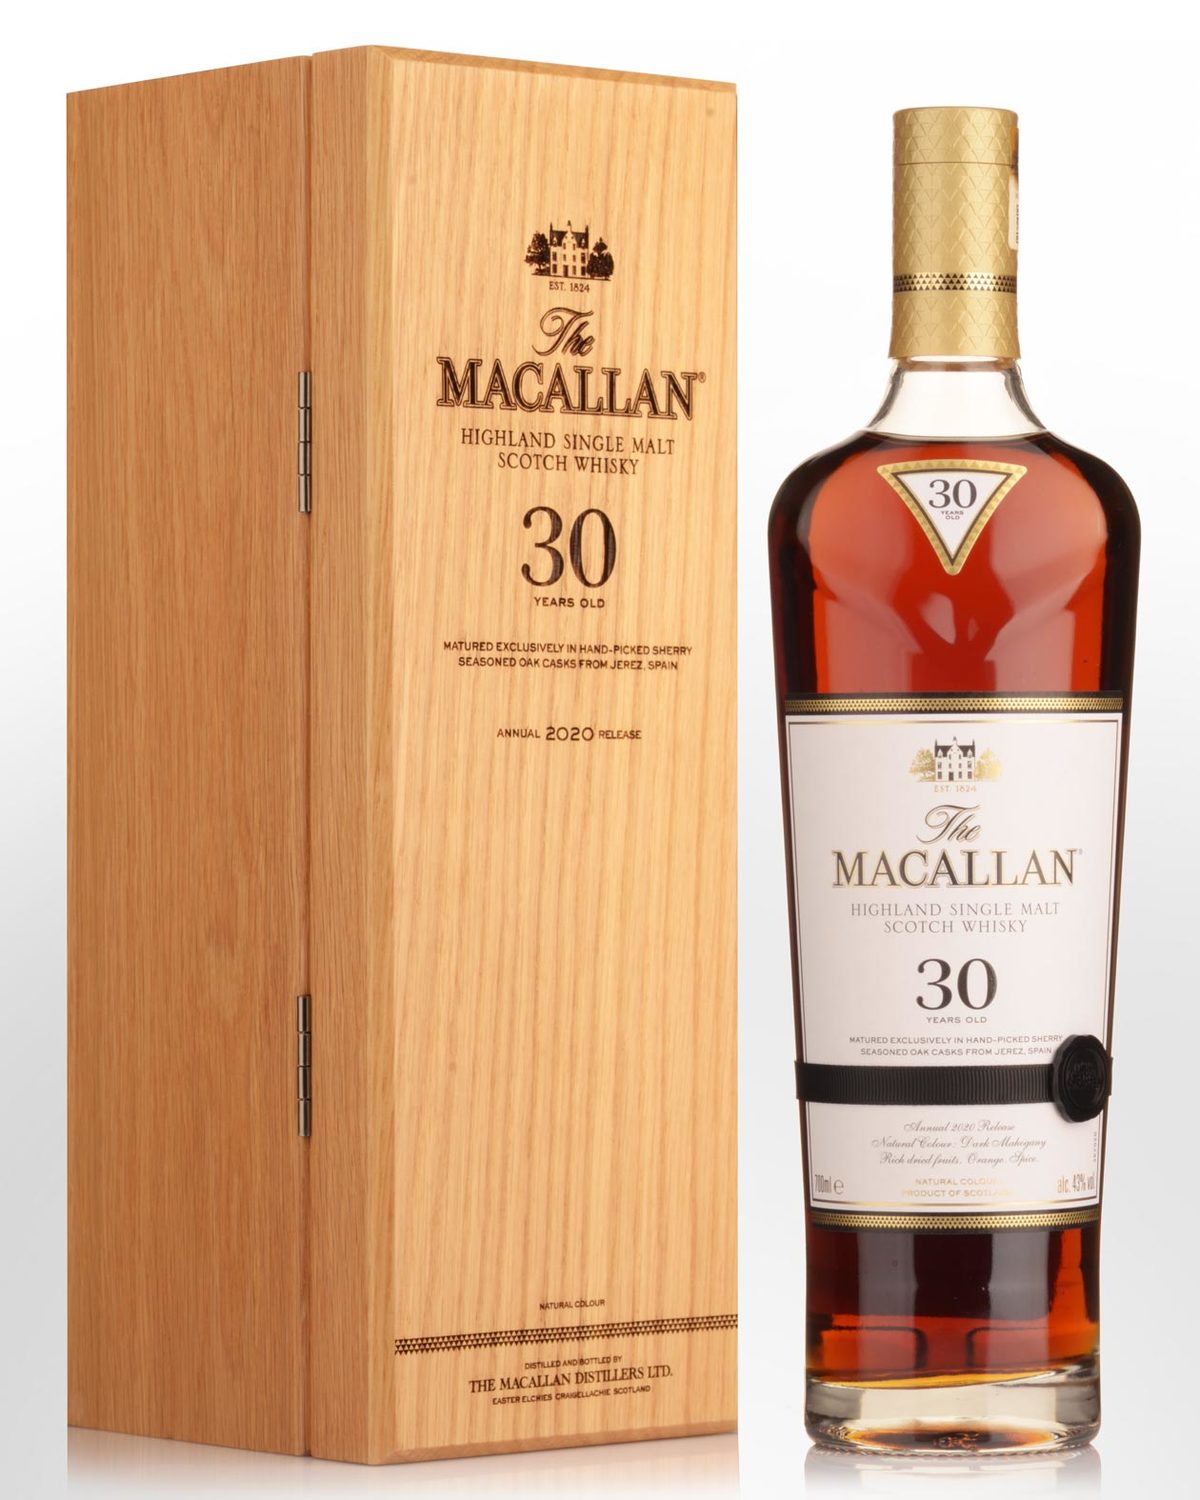 The Macallan 30 Year Old Single Malt Scotch Whisky (700ml) - Annual 2020 Release | Nicks Wine Merchants